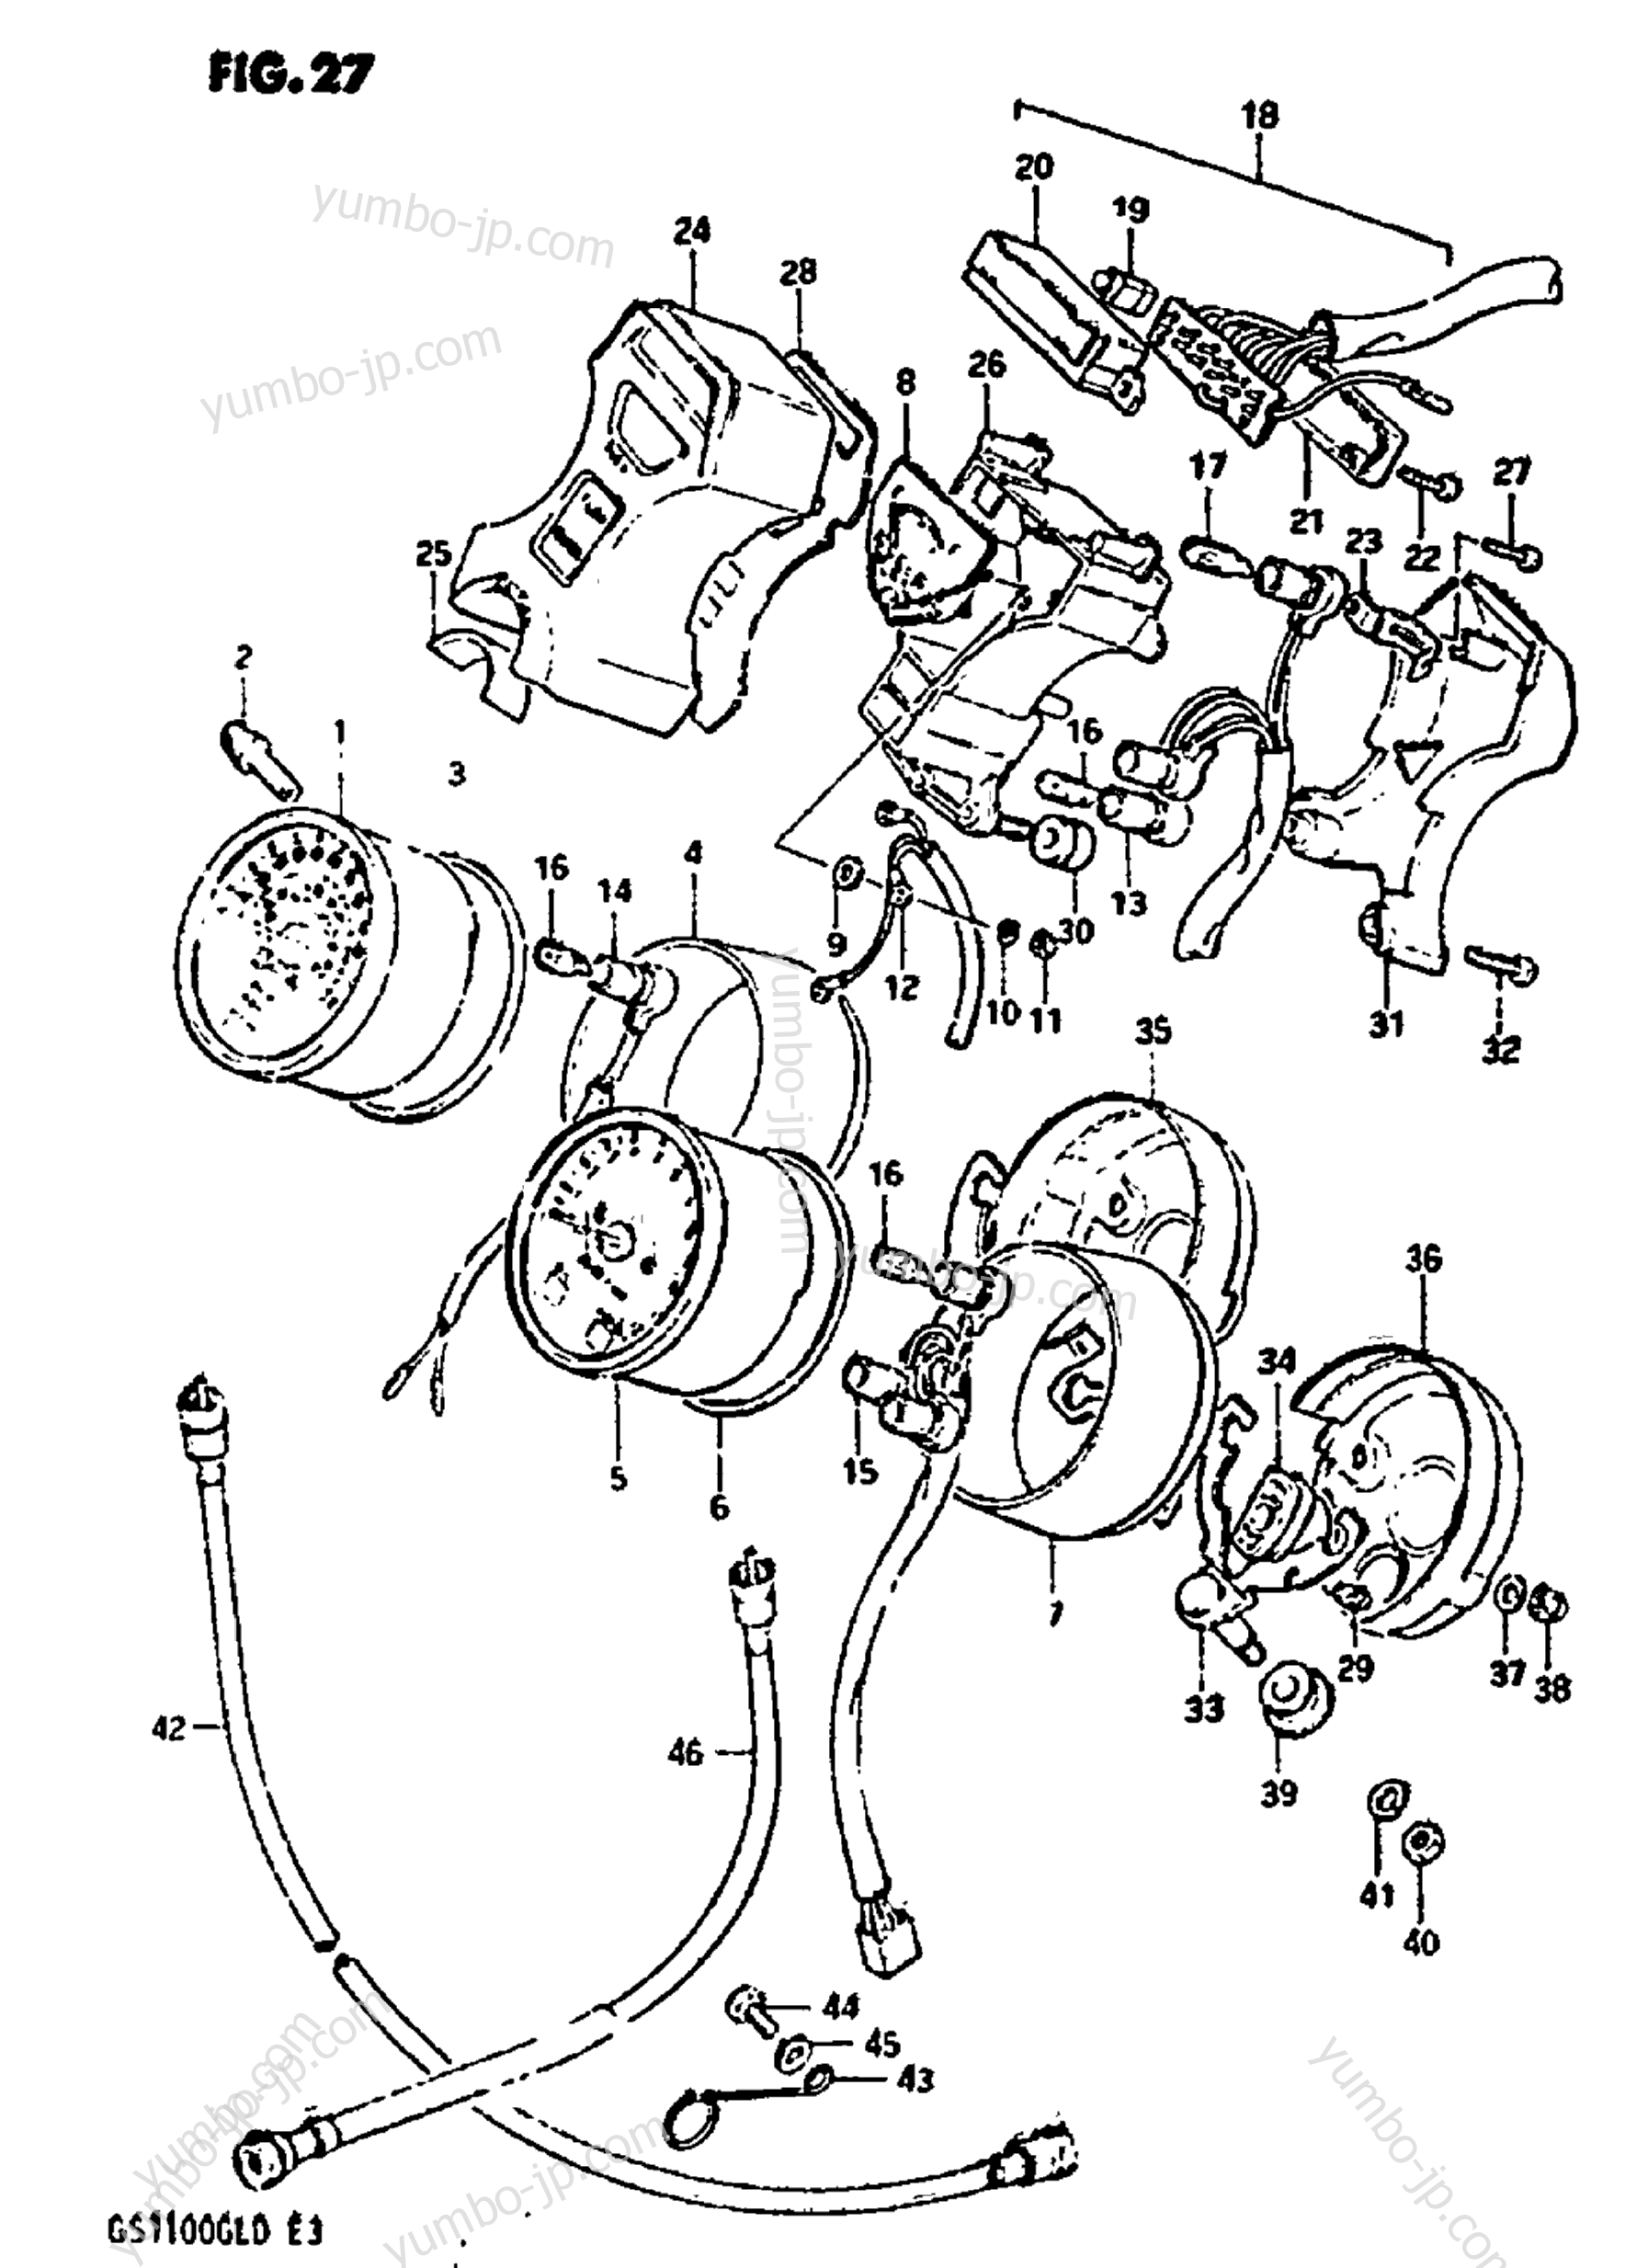 Speedometer-Tachometer for motorcycles SUZUKI GS1100GL 1983 year